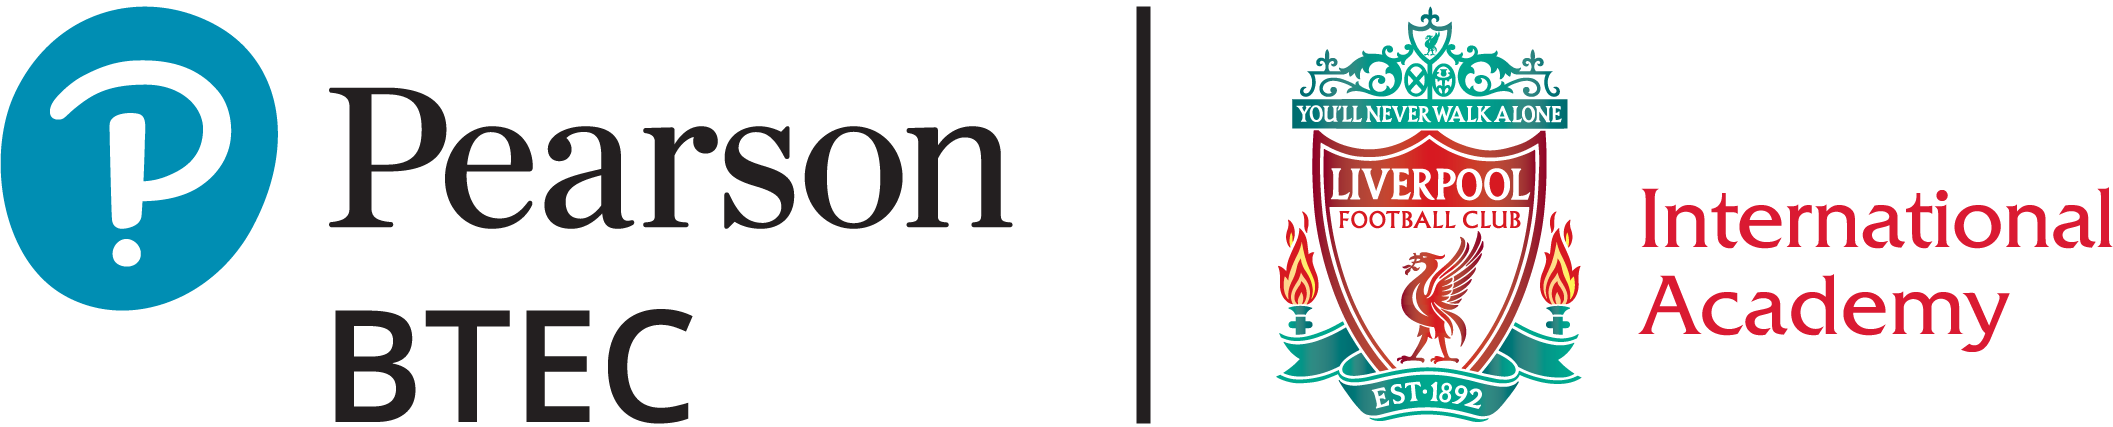 Pearson BTEC and International Academy logos